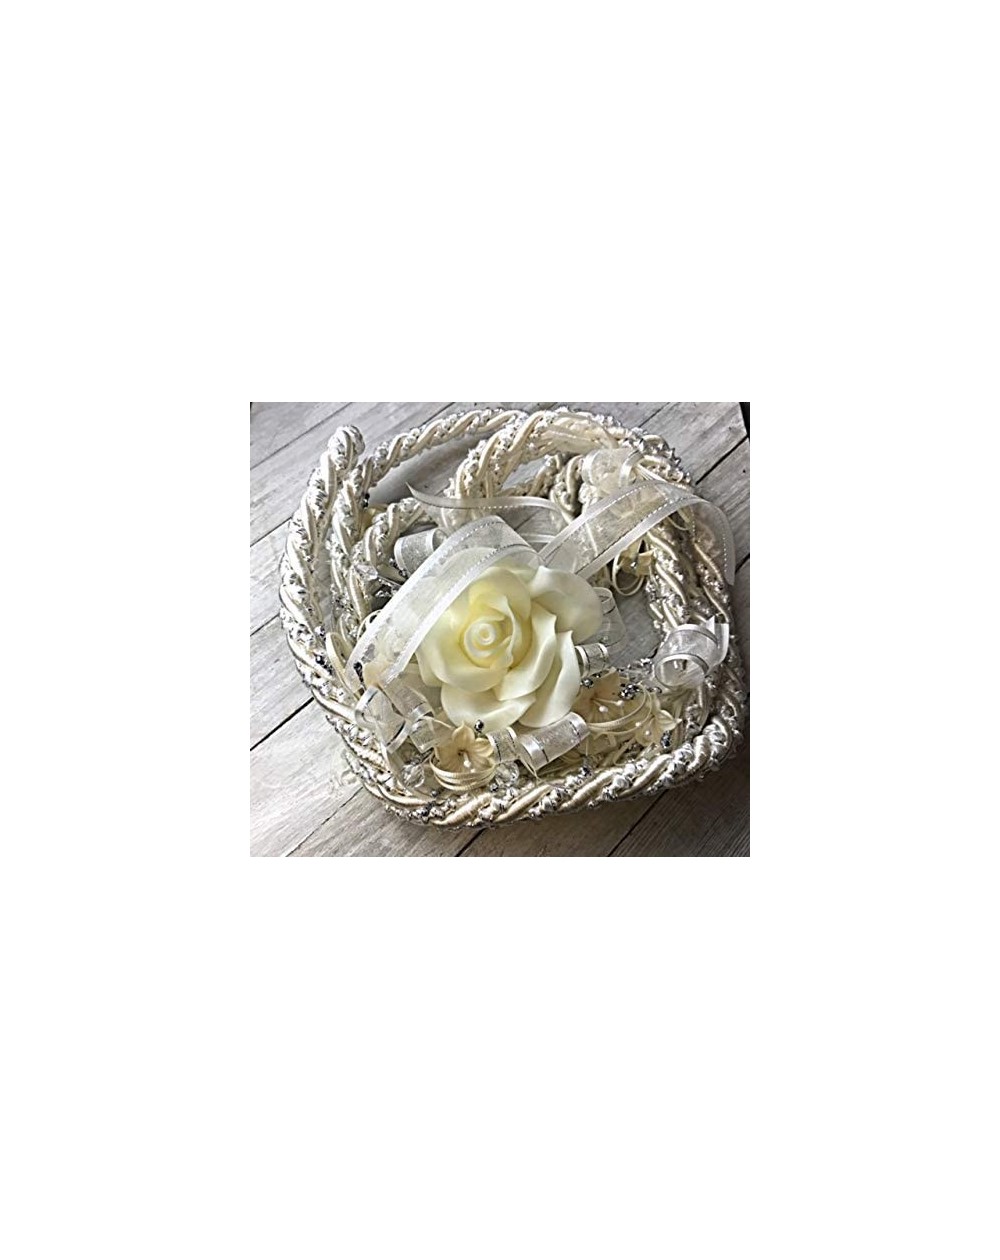 Favors Wedding Love Rope- with Flowers & Glitter Rhinestone. Traditional Wedding Lasso/Lazo de boda. (Ivory) - Ivory - C5196S...